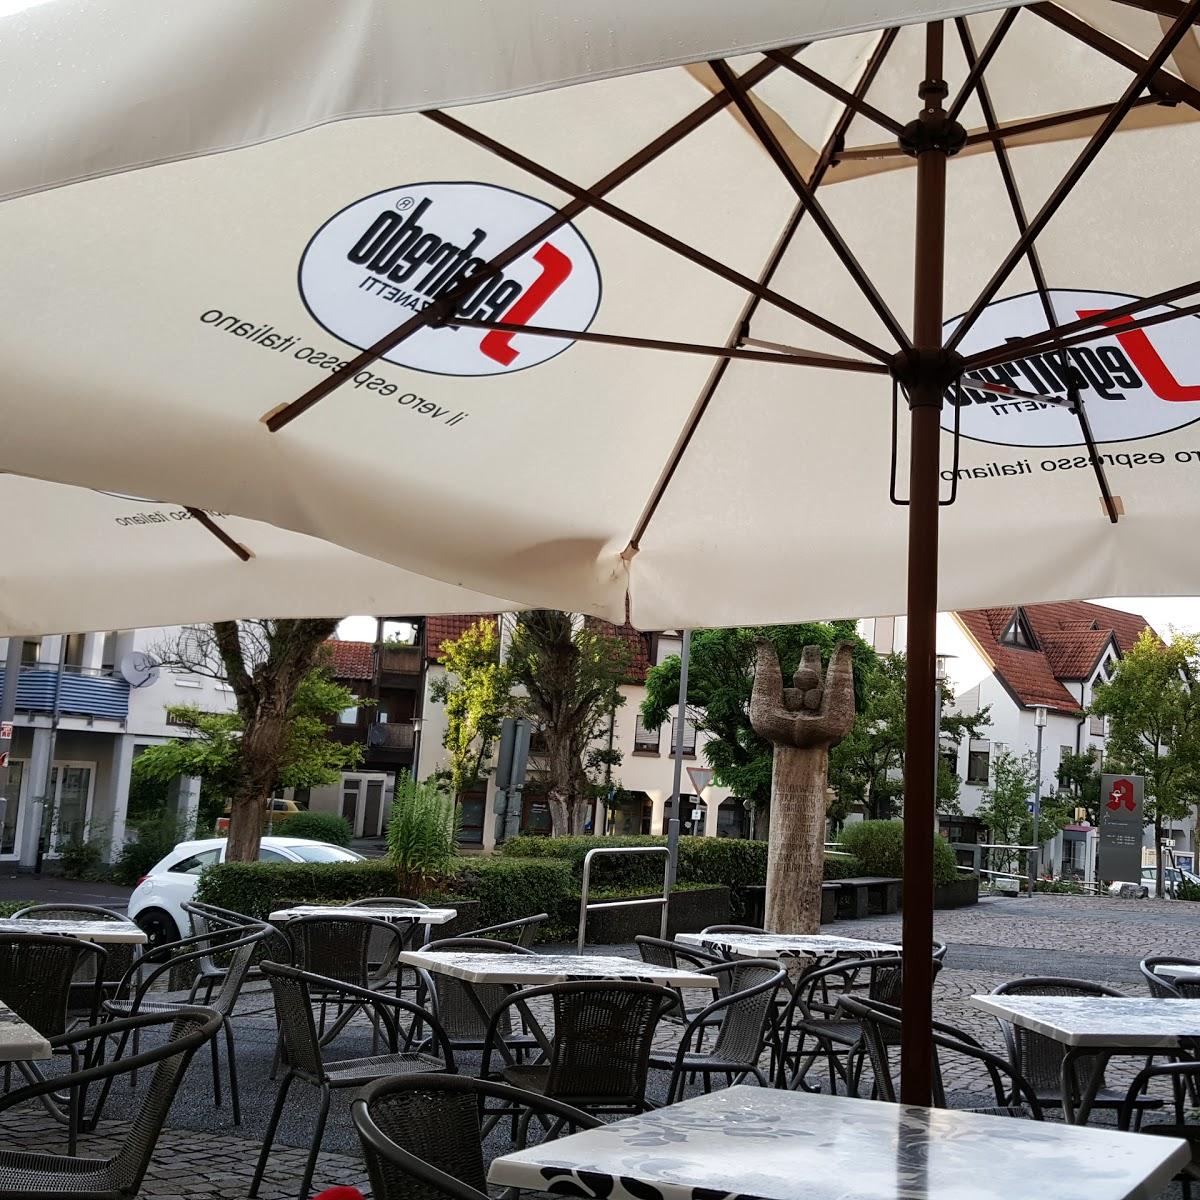 Restaurant "Ristorante Bianco e Nero" in Sersheim